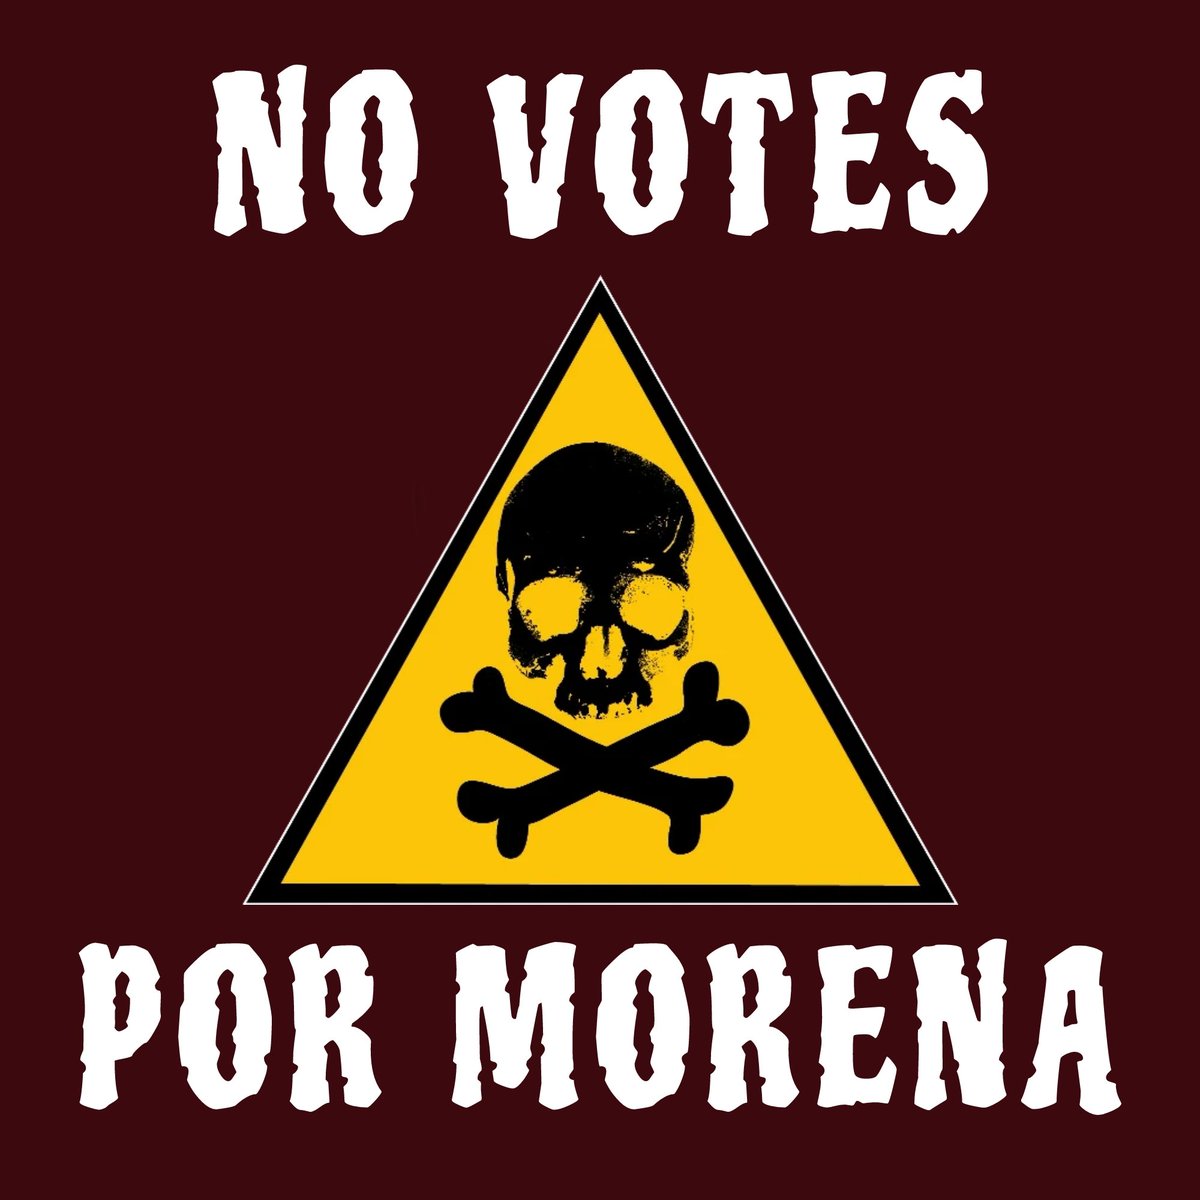 @luisag_urena @PAN_CDMX @DanyAlvarezca @ElBaronNews_ @JTrianaT @JorgeLara1 @ectorjaime @ferbelaunzaran @JJDiazMachuca @Xochitl2024 Un voto por  @PartidoMorenaMx te convierte en el verdugo de México,
#CandidataDeLasMentiras 
#ClaraSeDesploma #EstamosHastaLaMadre